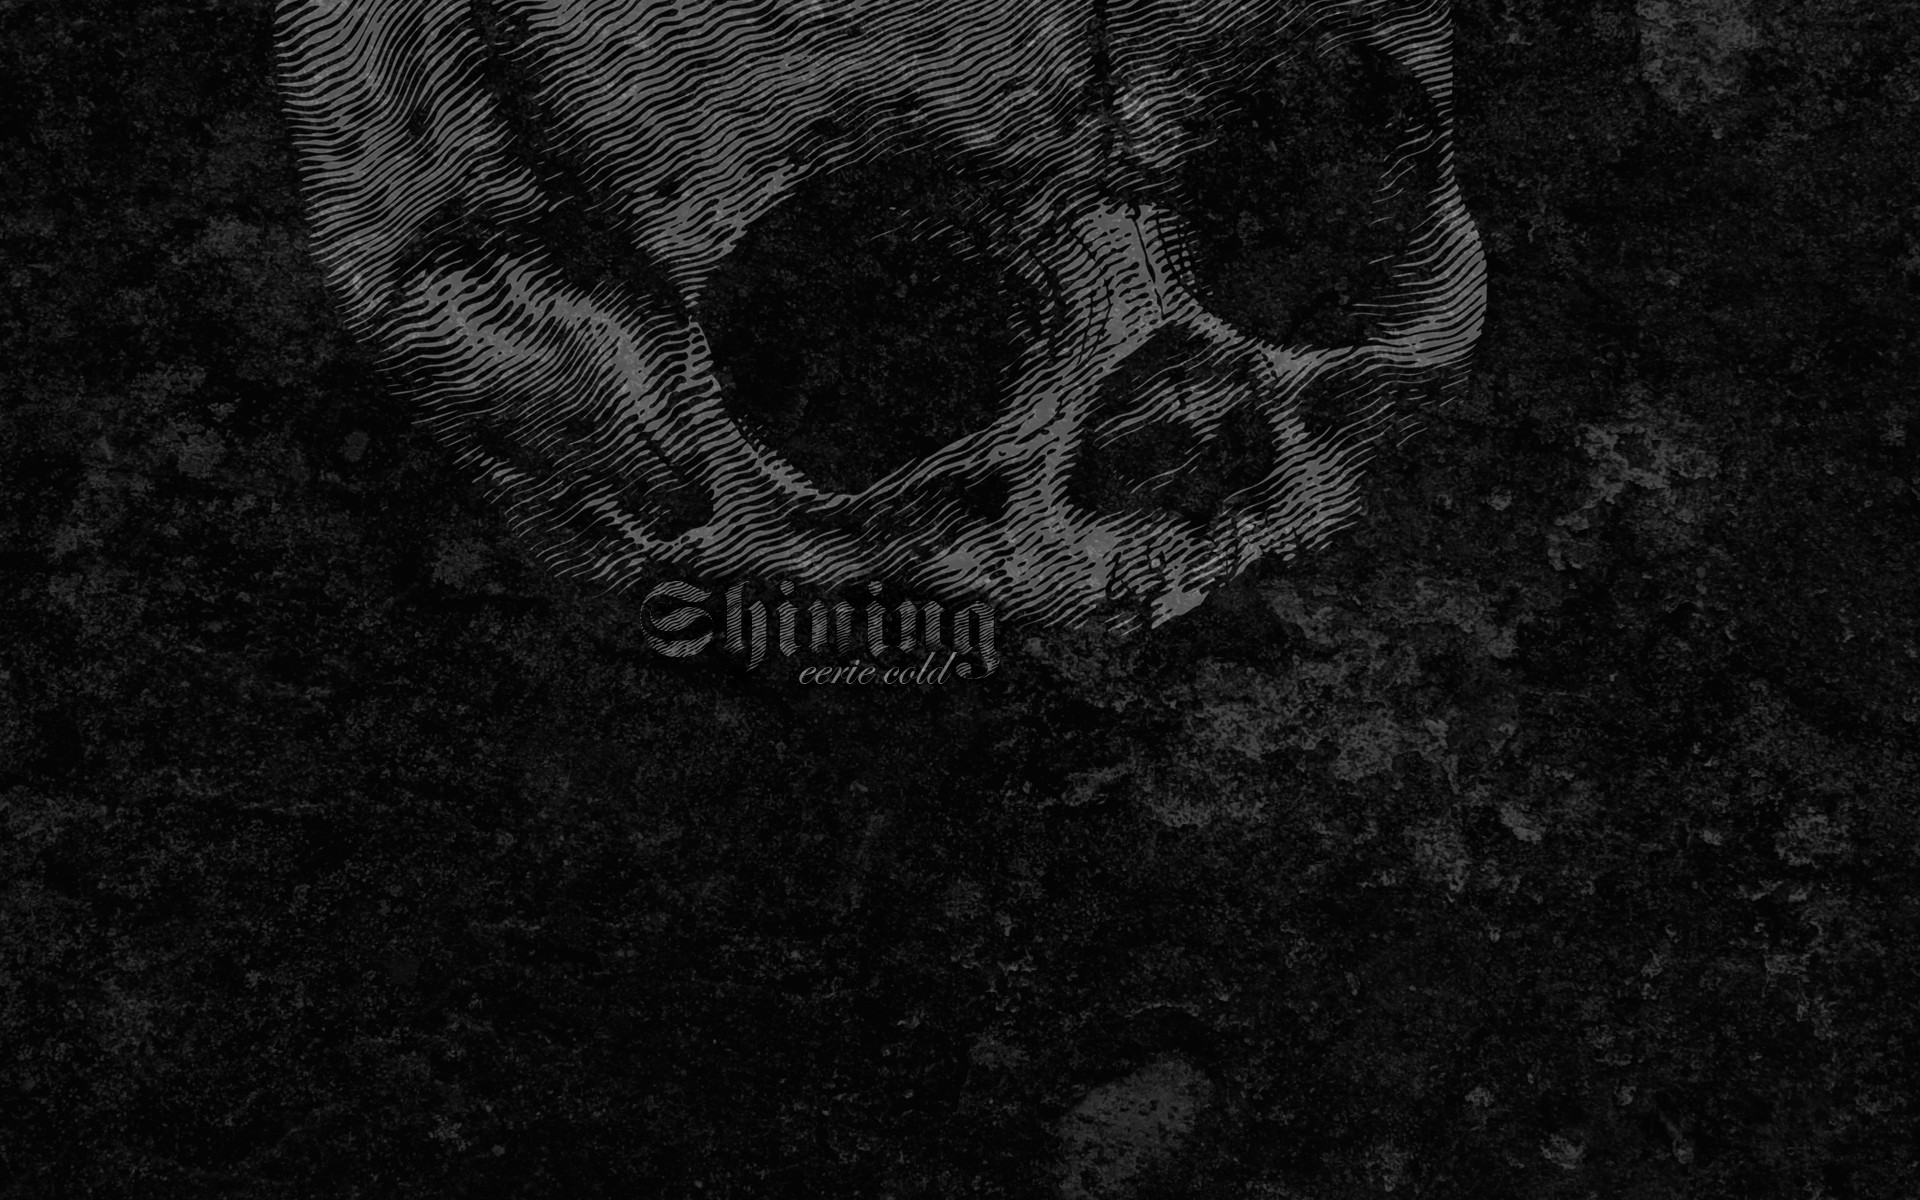 skulls, black, metal, cold, shining, textures - desktop wallpaper